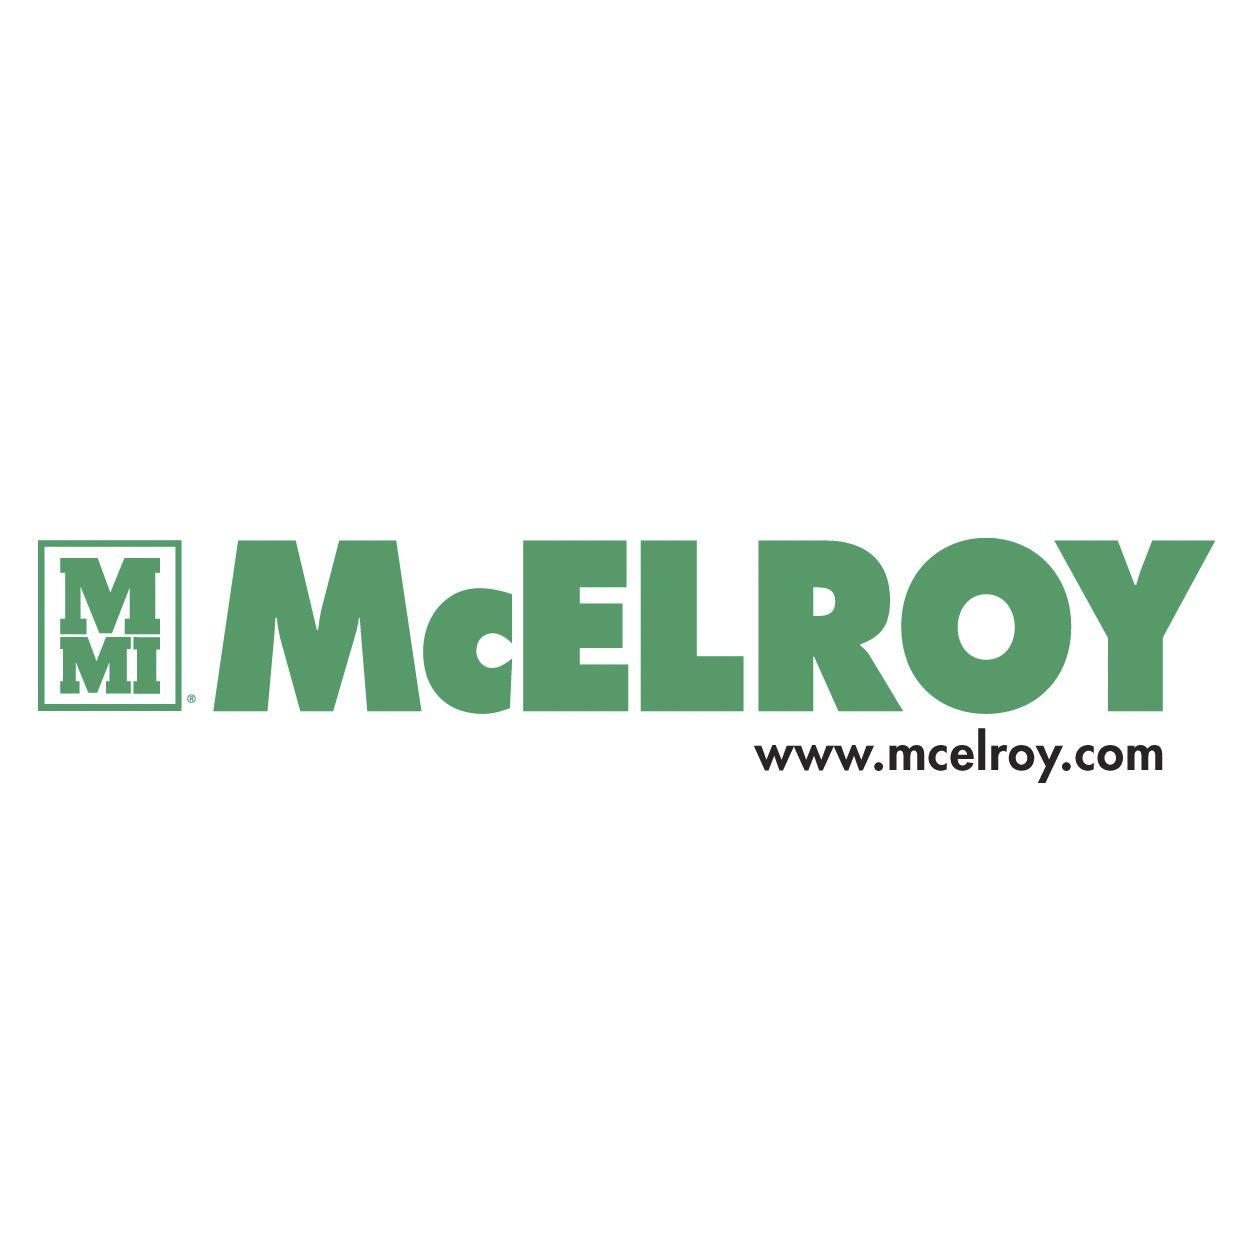 McElroy Logo - McElroy Partners with Netafim to Grow HDPE Equipment Business | 2017 ...